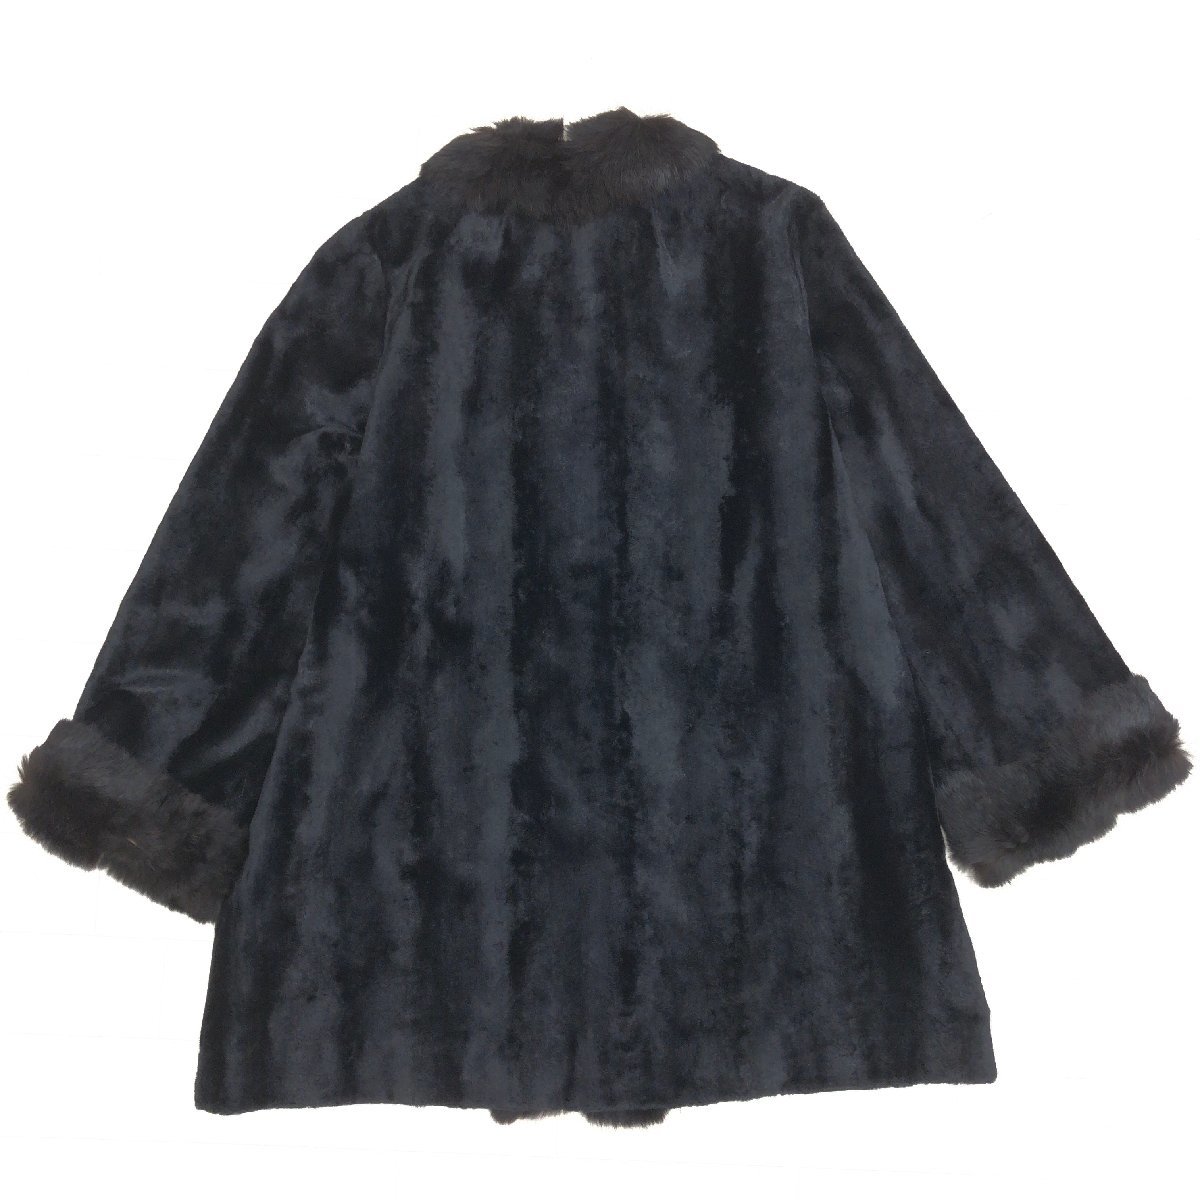 *Benaru WATAICHIbenaru gorgeous fox fur trim eko fur coat 11(L) black black fake fur fur made in Japan domestic regular goods woman 